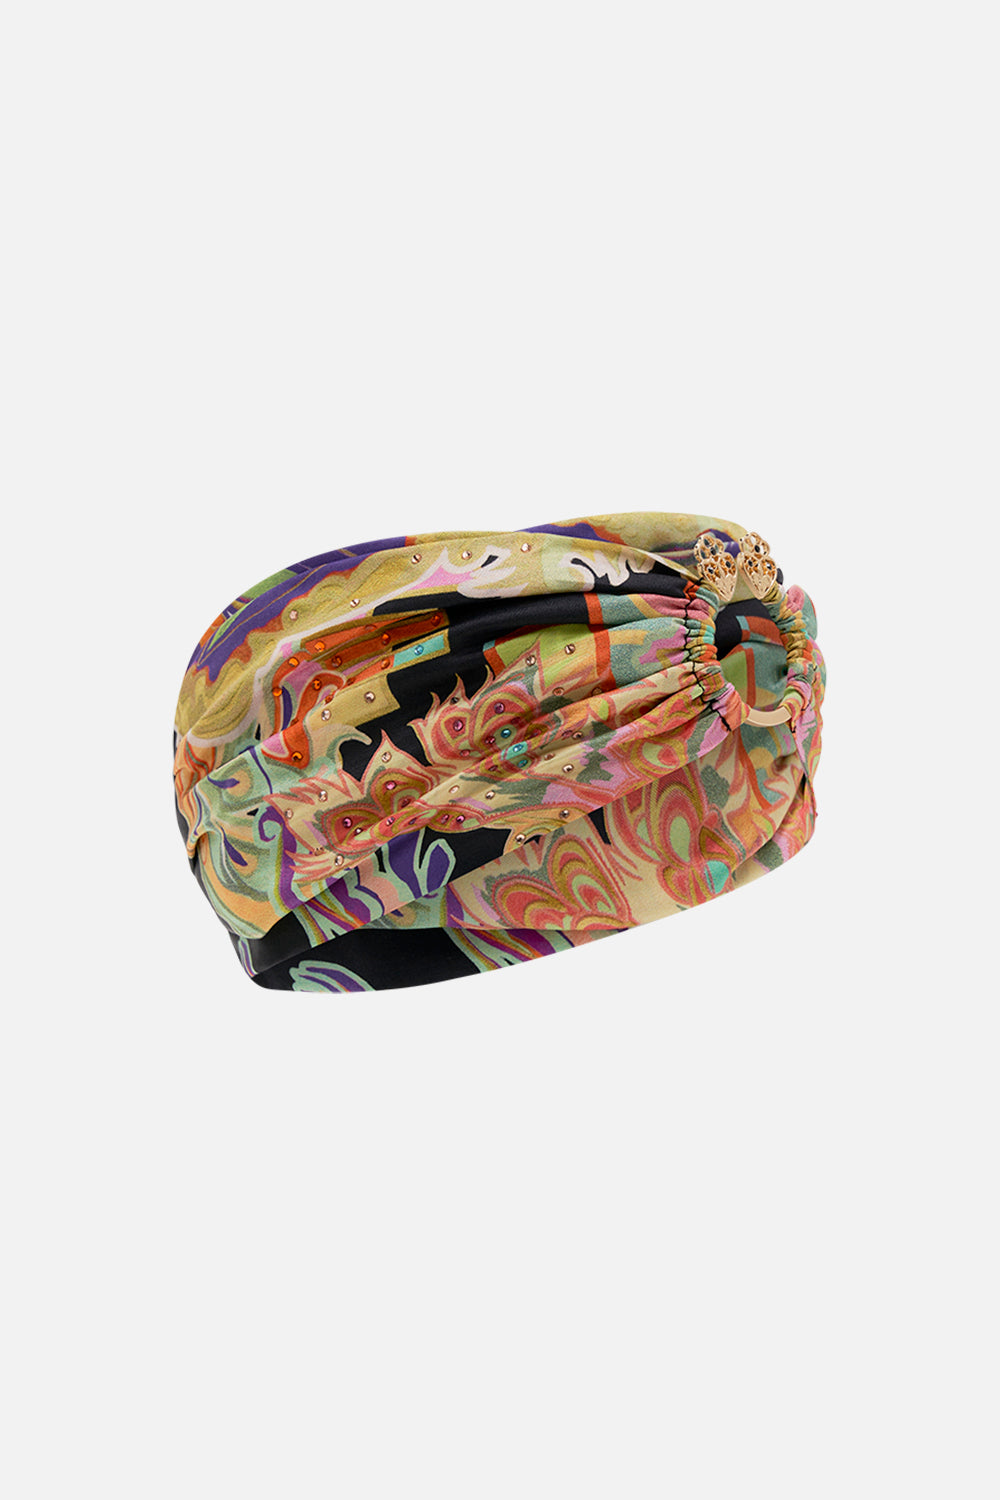 CAMILLA silk headband in Club Cinemania print